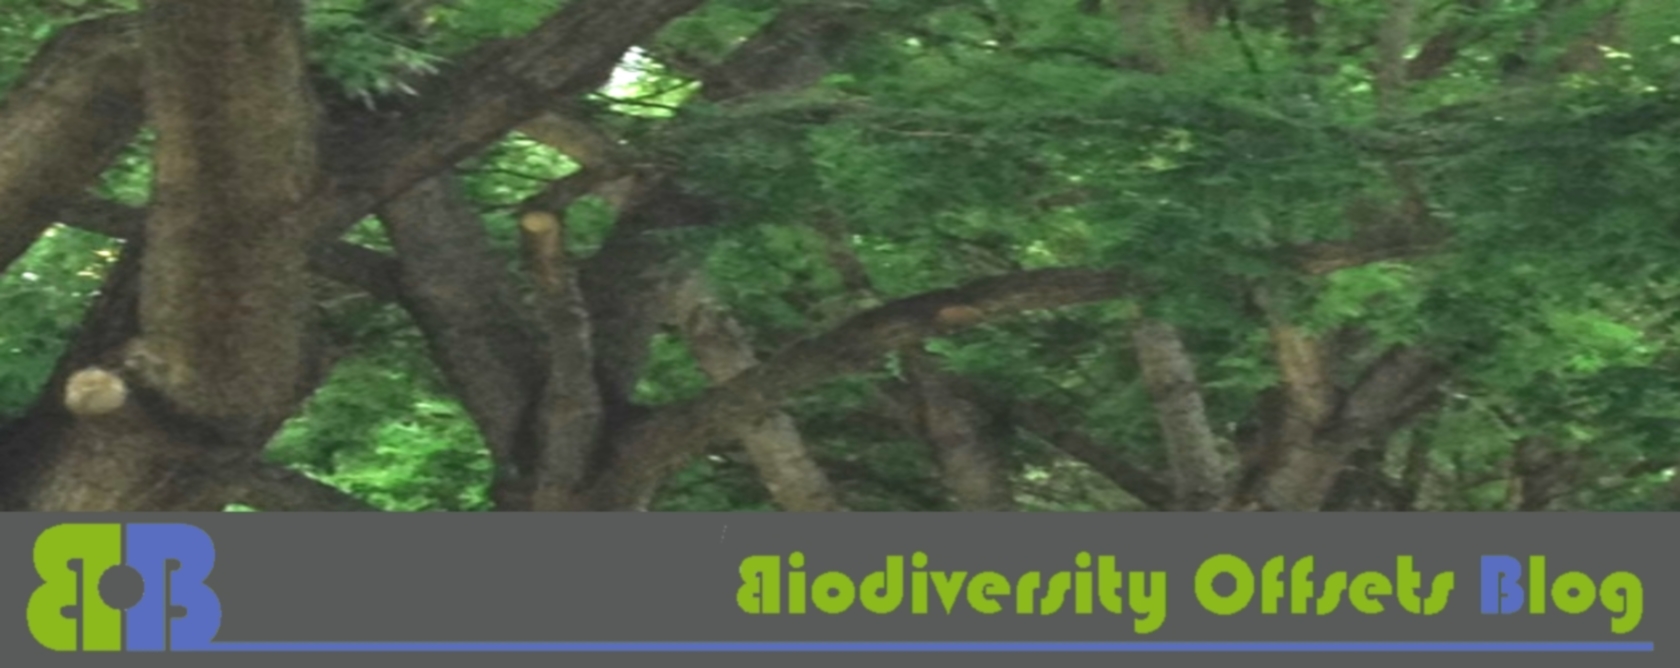 Biodiversity Offsets Blog Logo_hellgruen_Bäume_1680